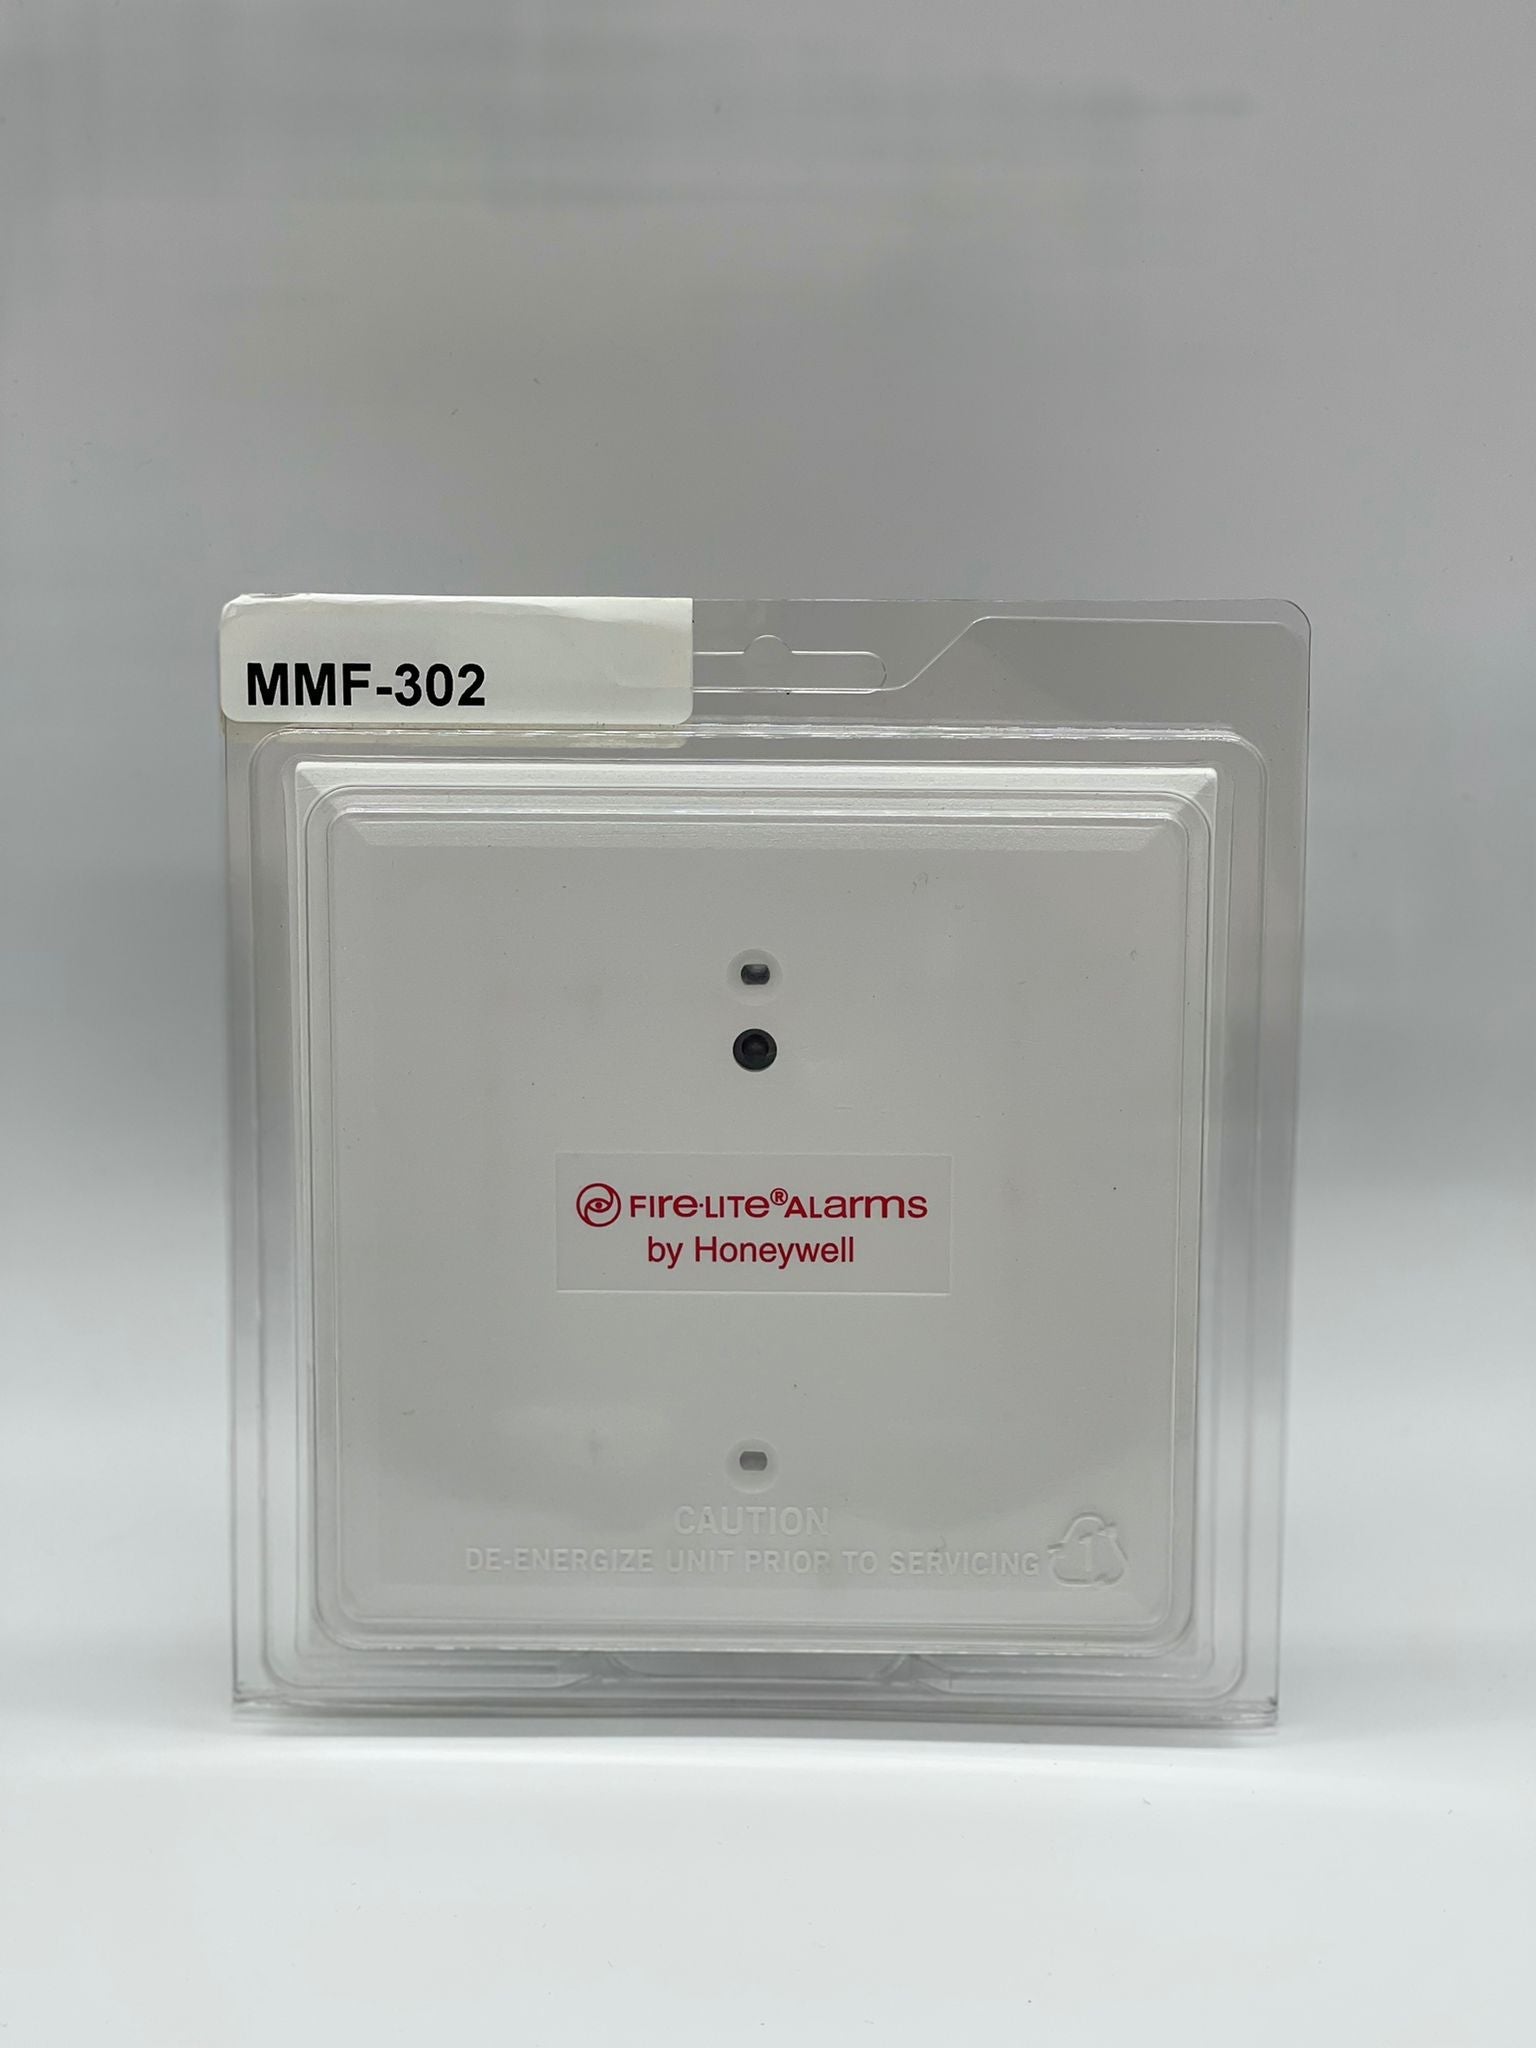 Firelite MMF-302 - The Fire Alarm Supplier